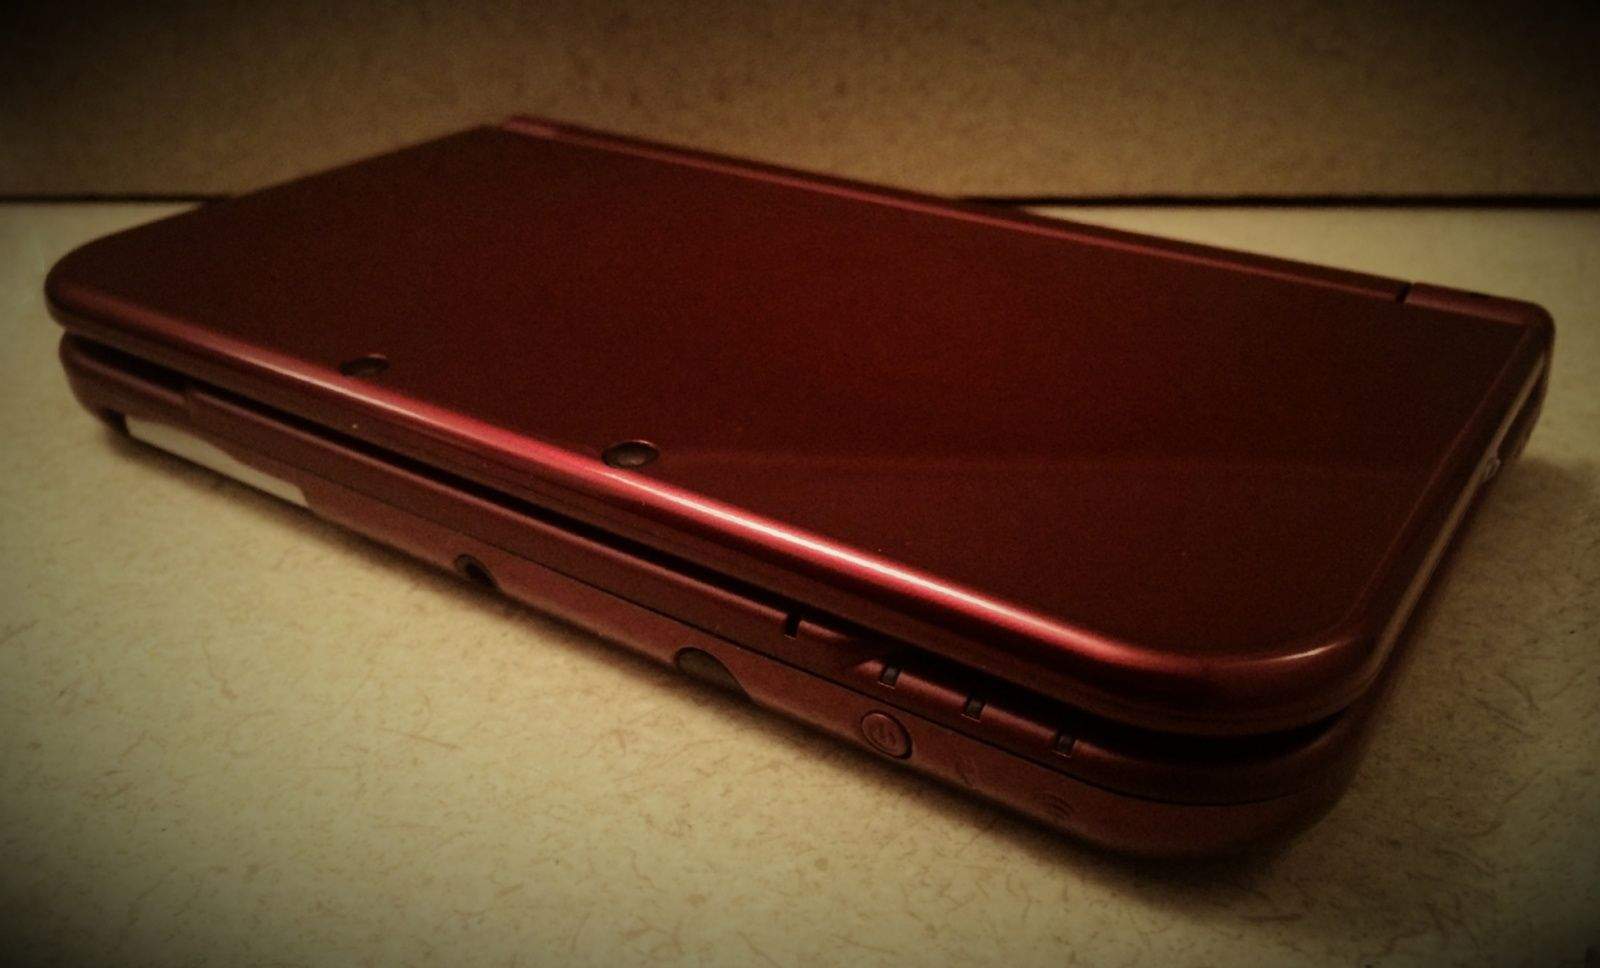 It's bigger and shinier than any Nintendo handheld ever made. Photo: Evan Killham/Cult of Mac